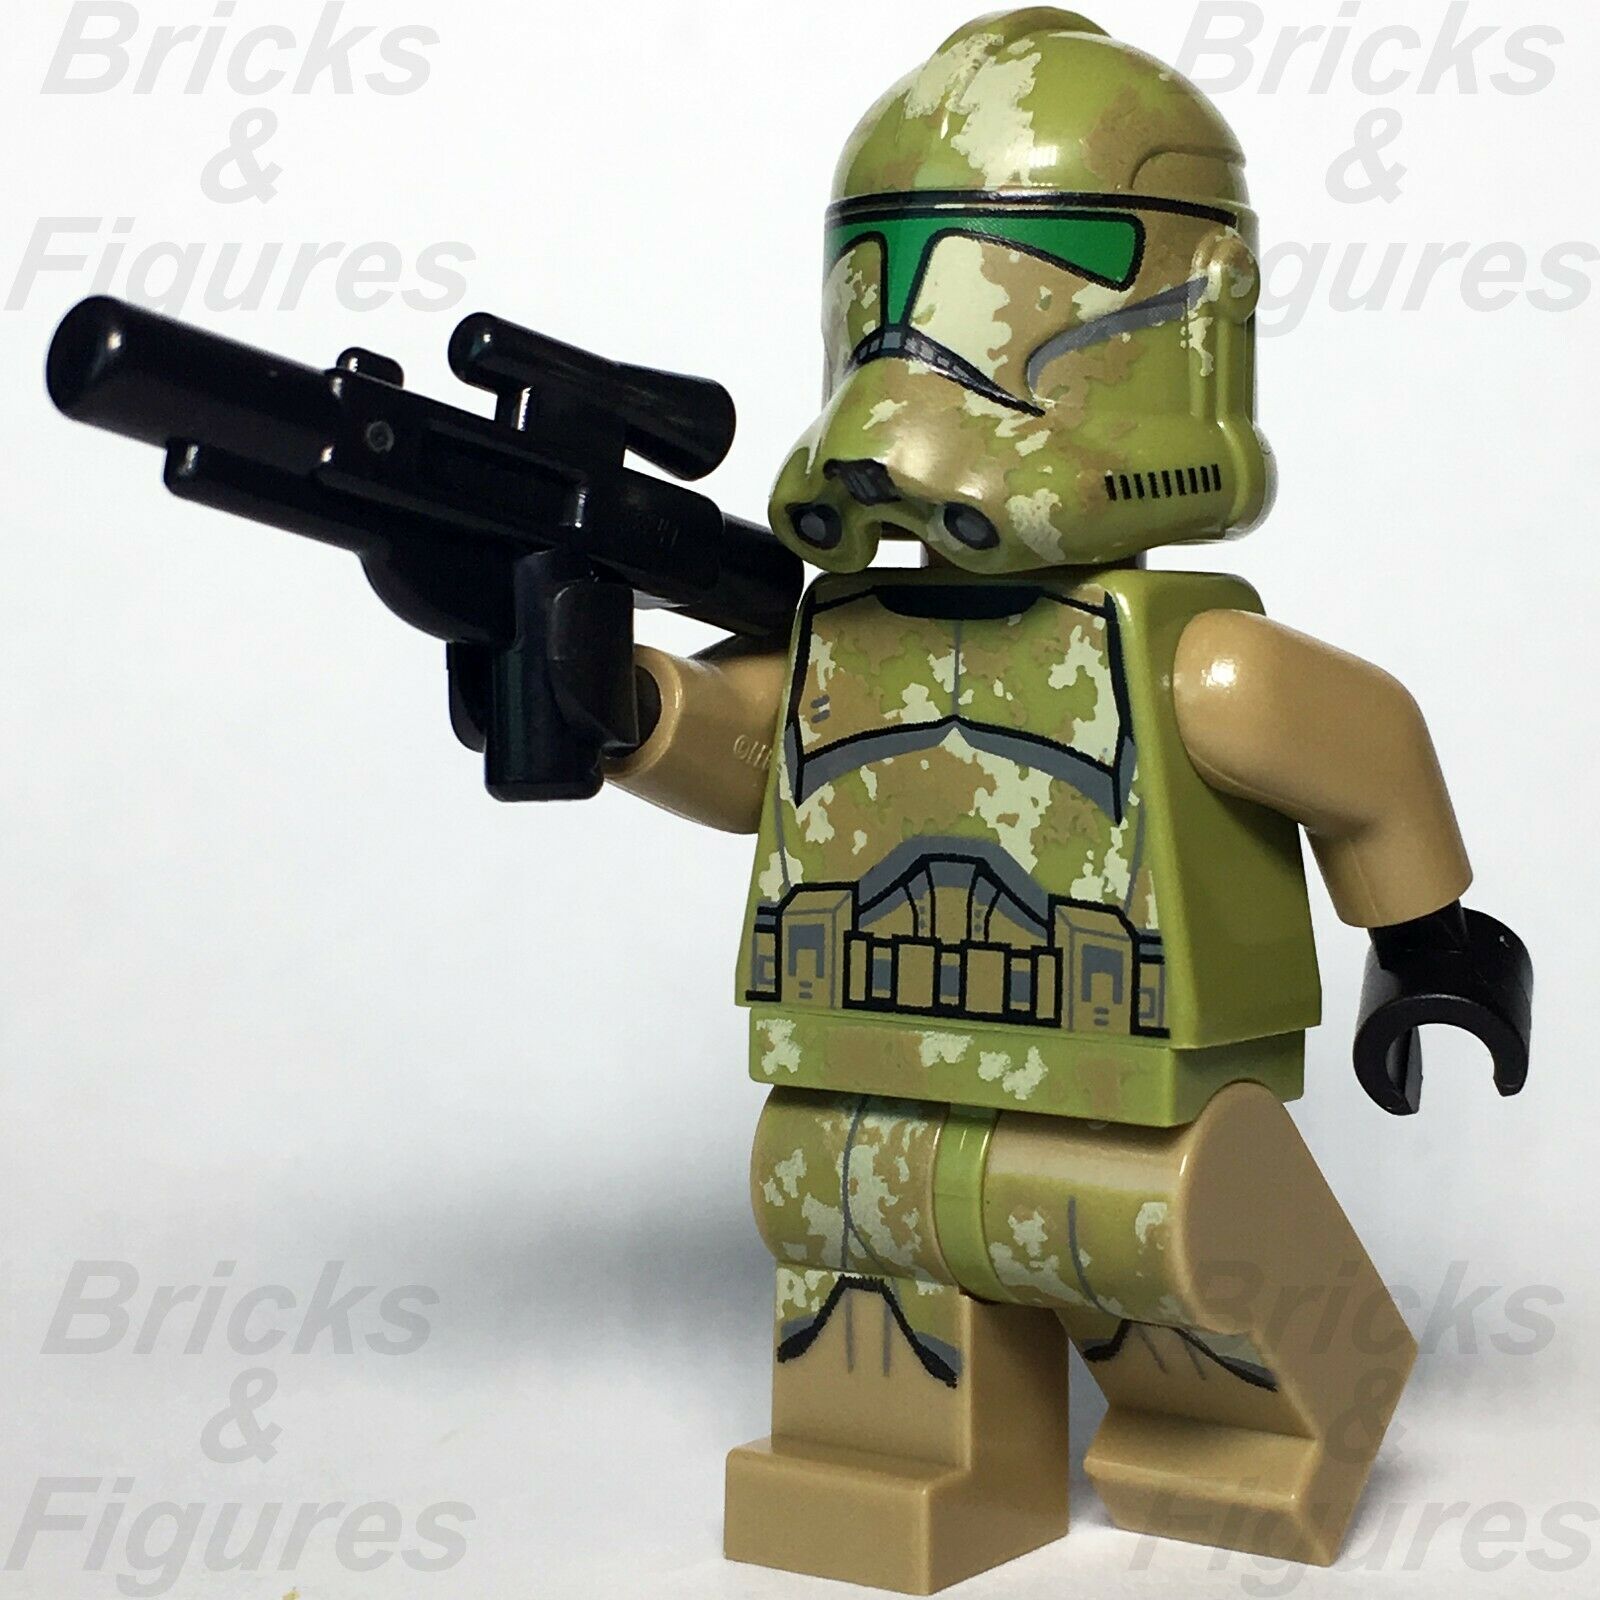 New Star Wars LEGO 41st Kashyyyk Clone Trooper Minifigure 75035 75142 Genuine - Bricks & Figures